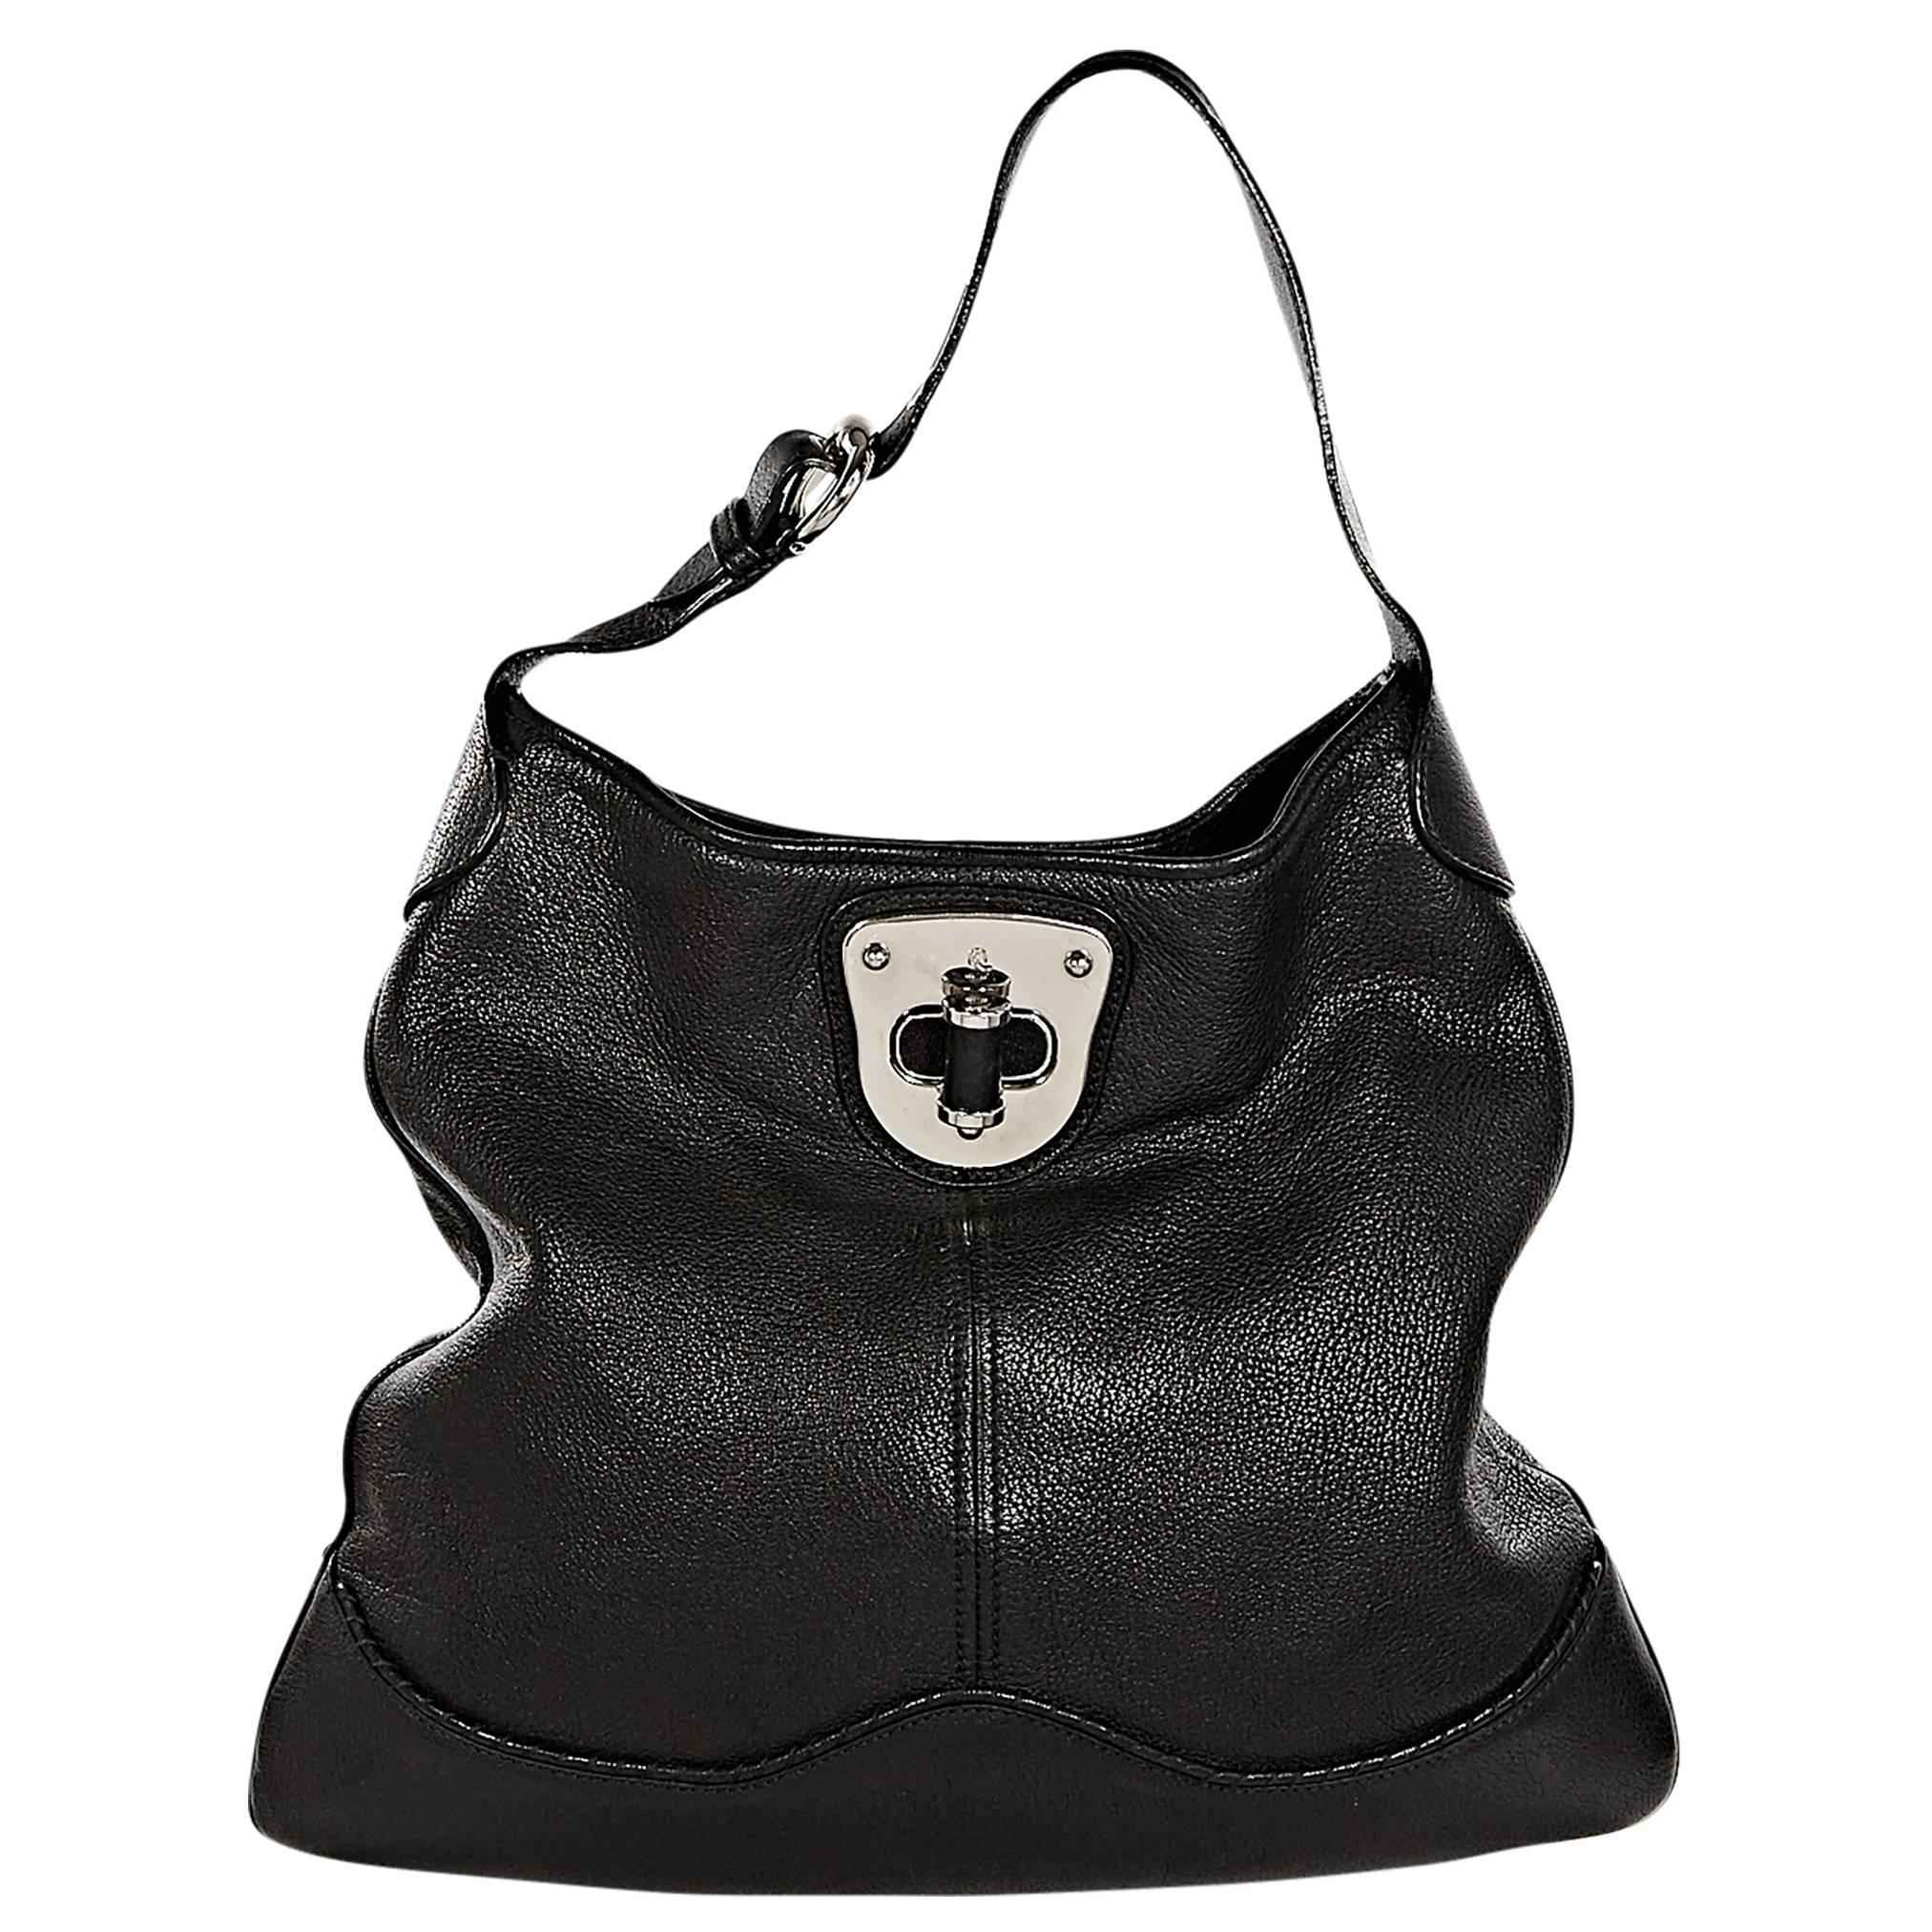 Black Alexander McQueen Leather Hobo Bag